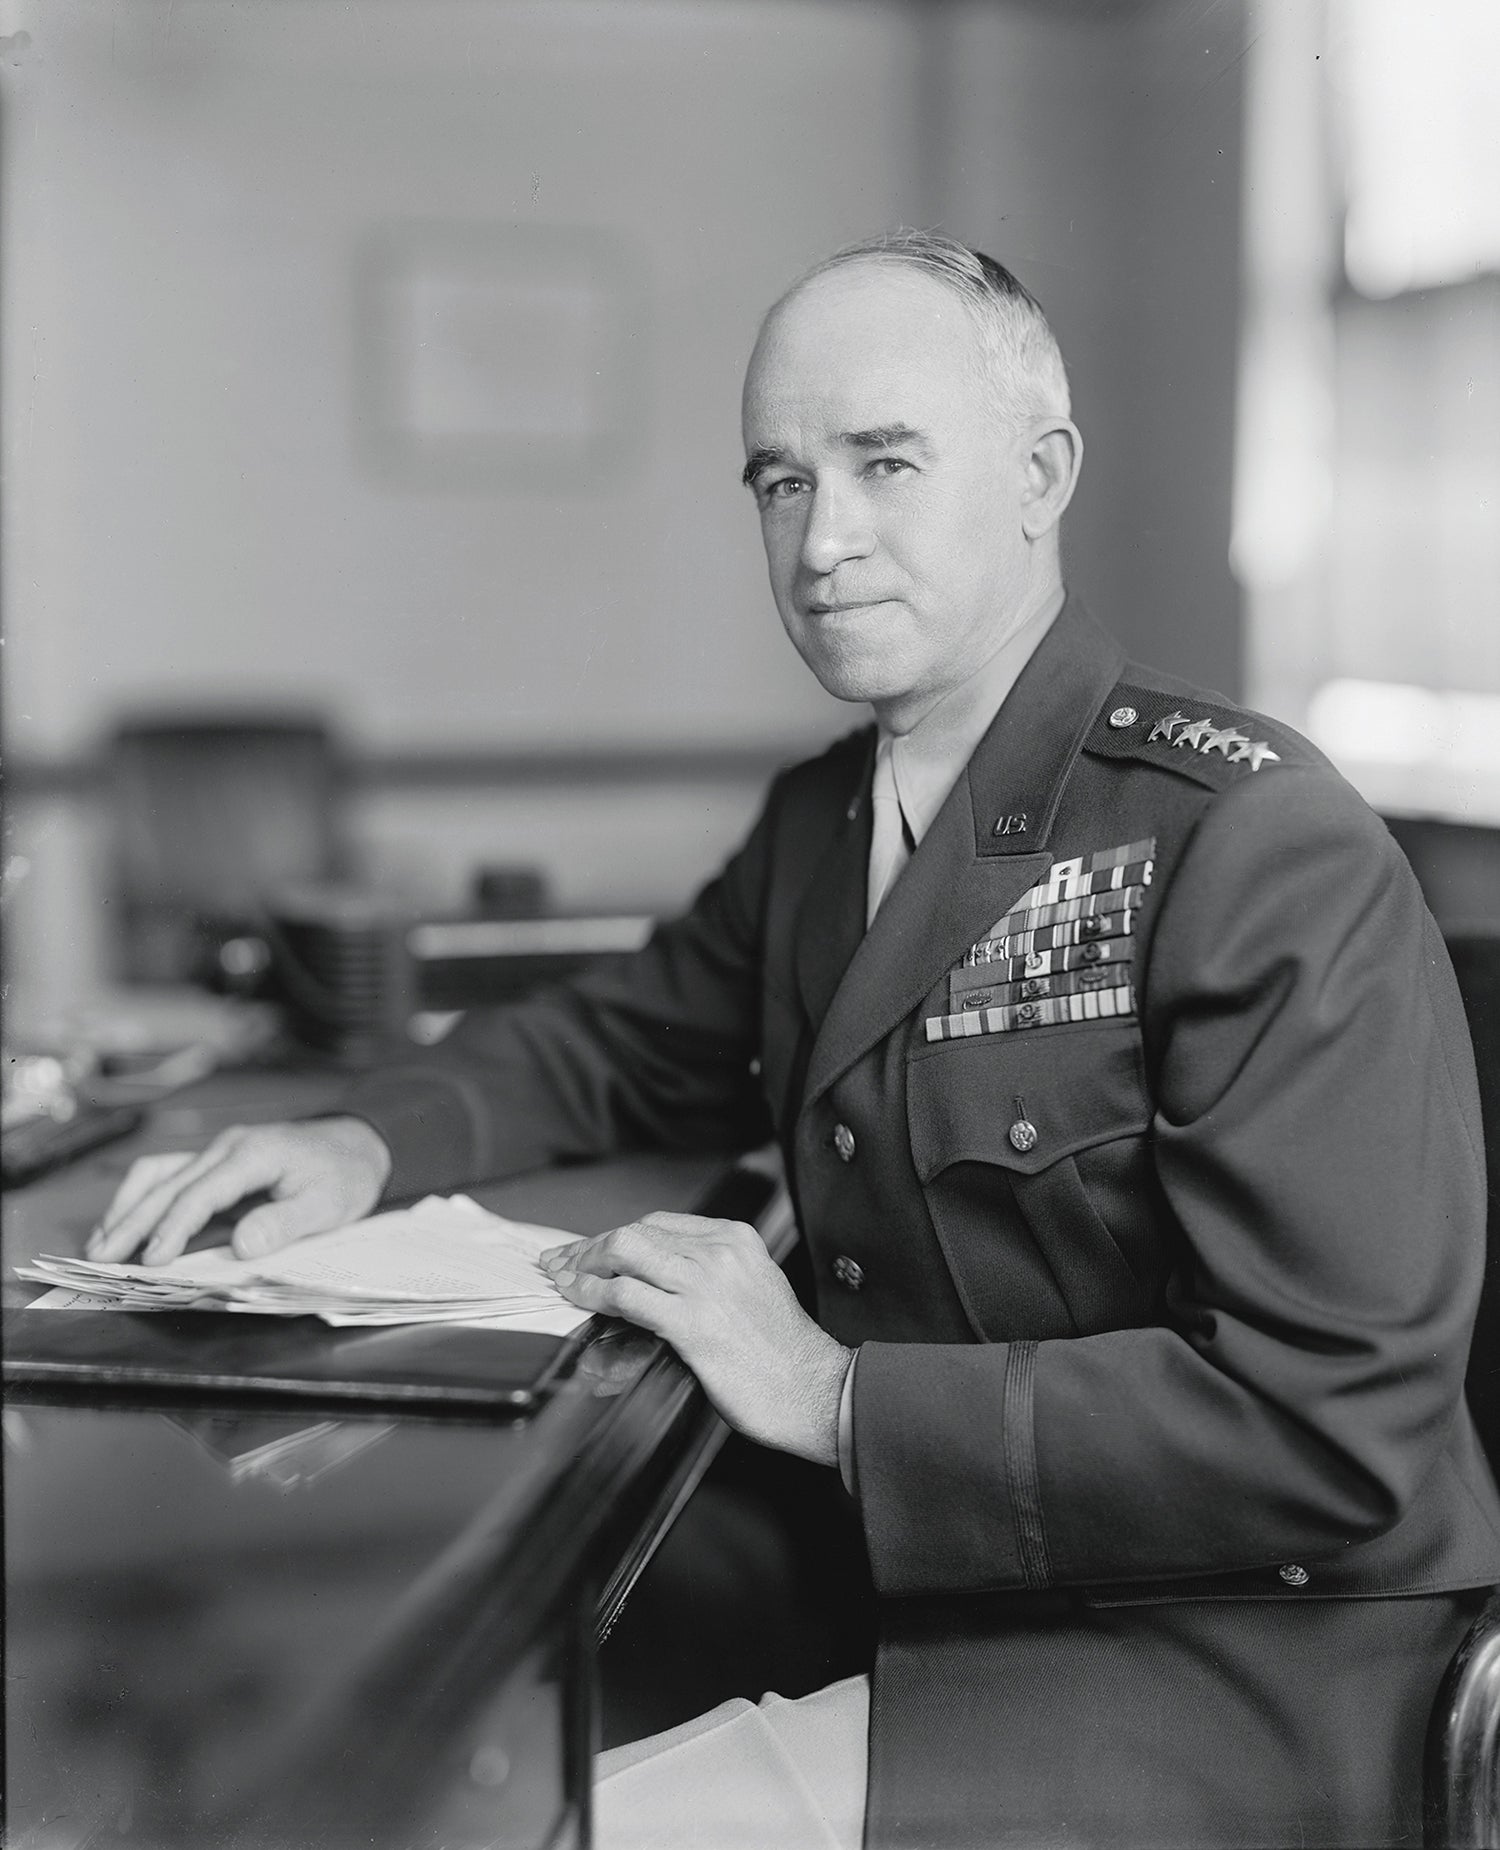 Gen. Omar Bradley, circa 1945. (Credit: Library of Congress)